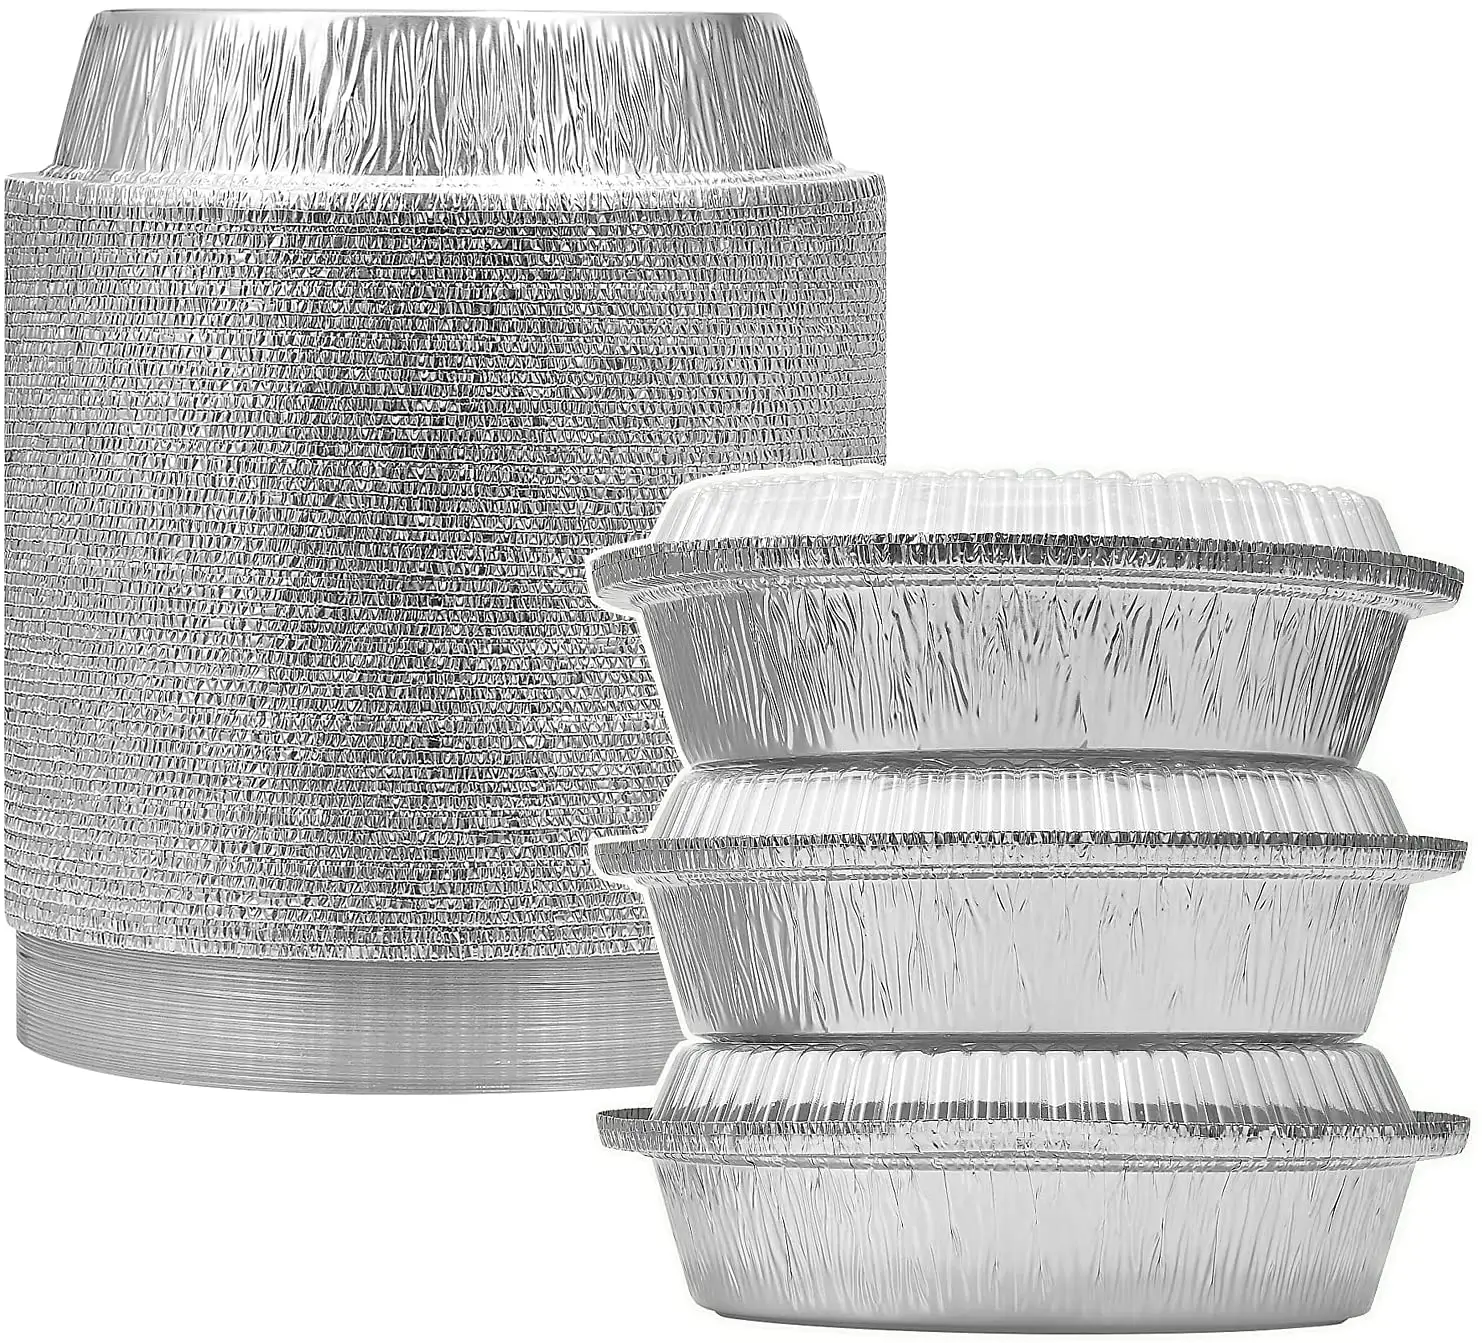 7 8 9 Zoll Einweg-Aluminium folien behälter Backblech Runde Aluminium folien pfannen mit Deckel gebrauchtes Haushalts-und Backhaus